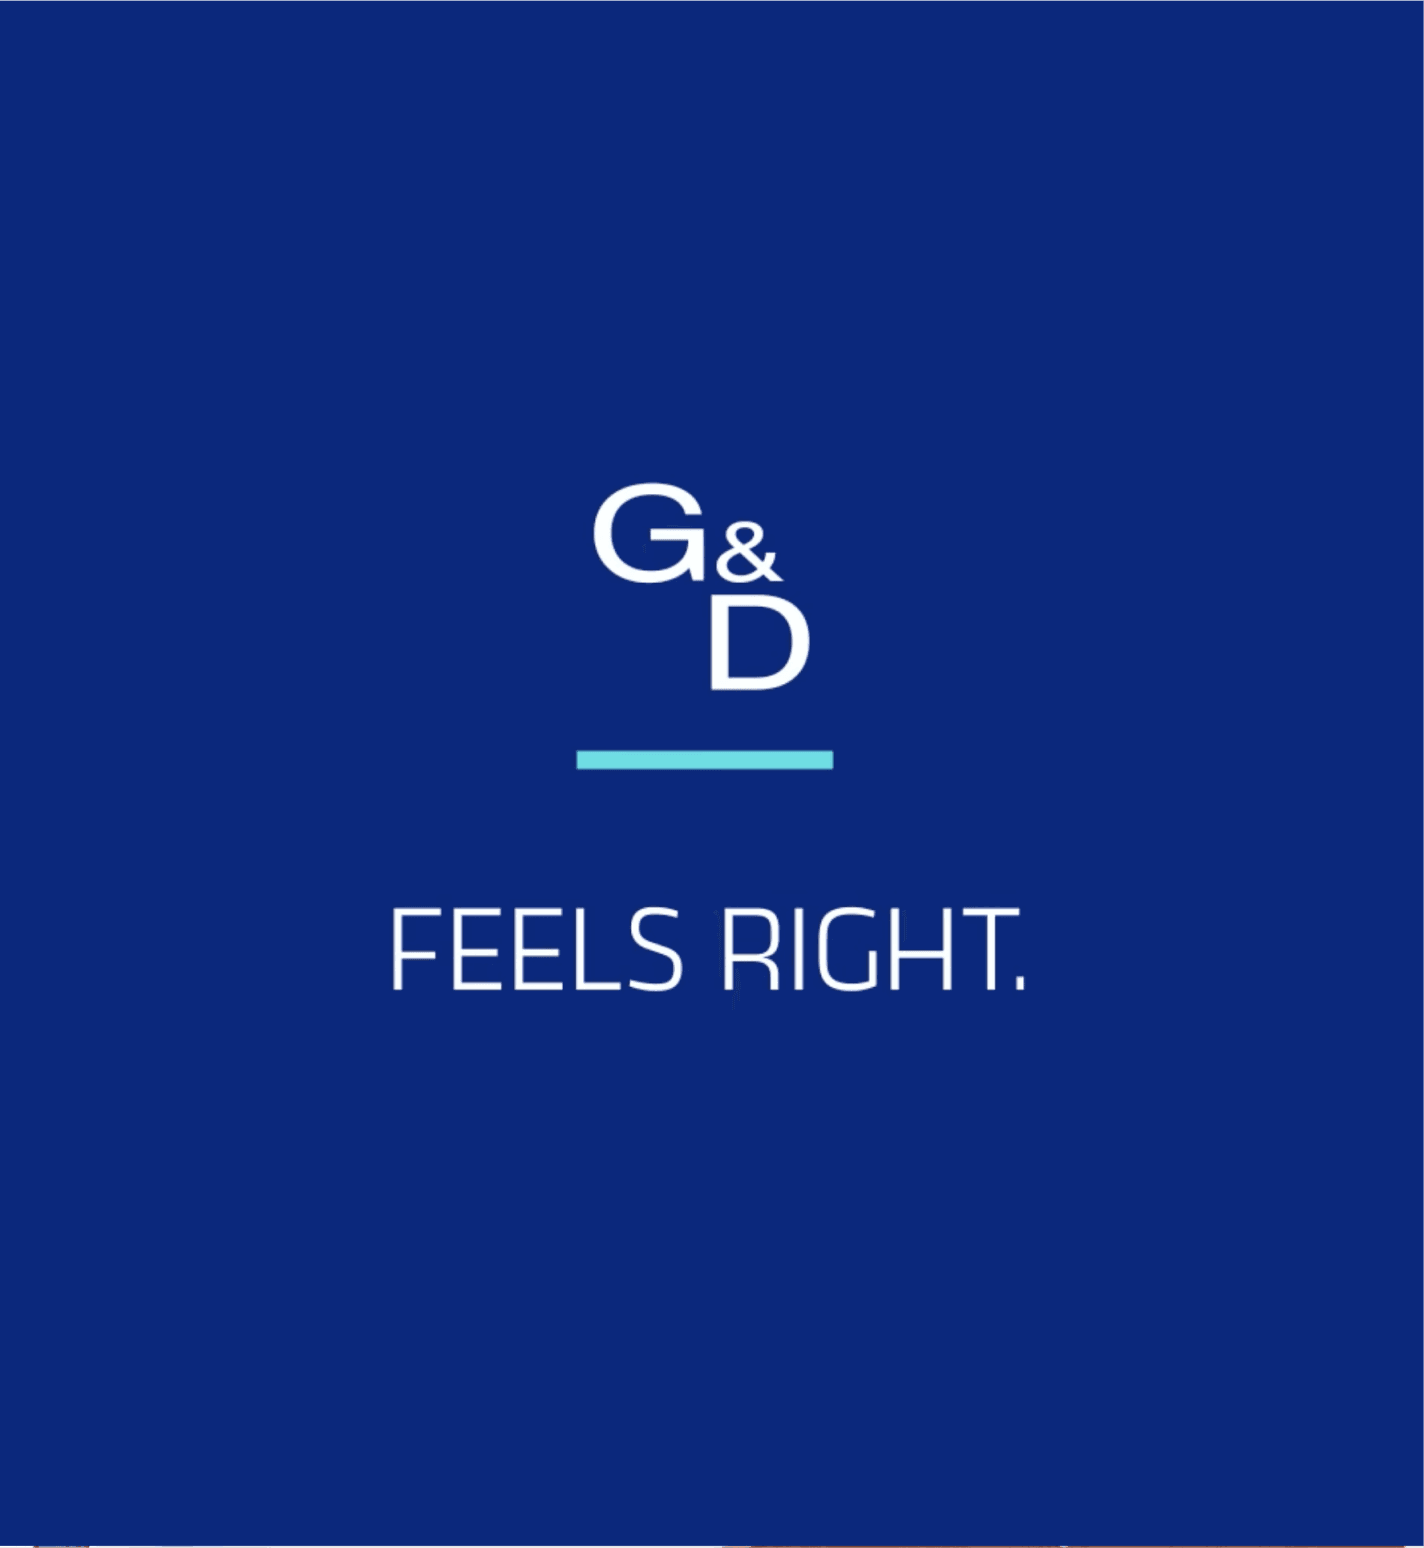 G&D - Feels right